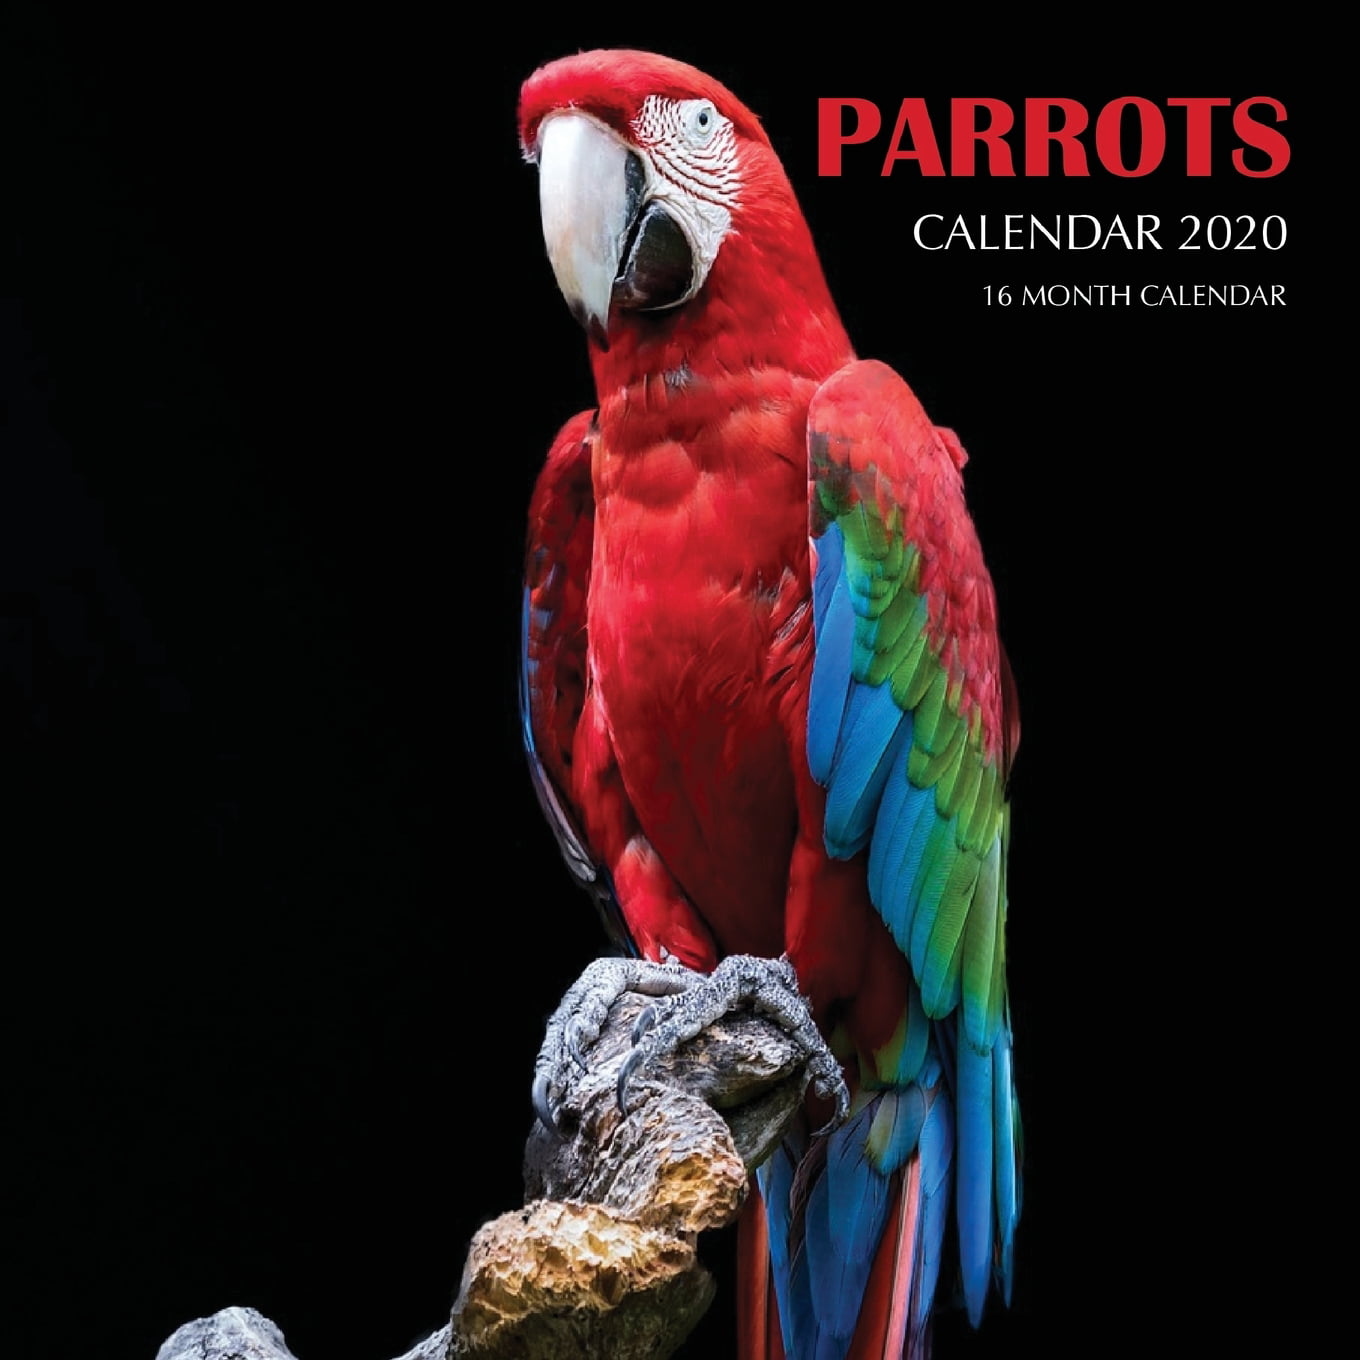 Parrots Calendar 2020 : 16 Month Calendar (Paperback) - Walmart.com